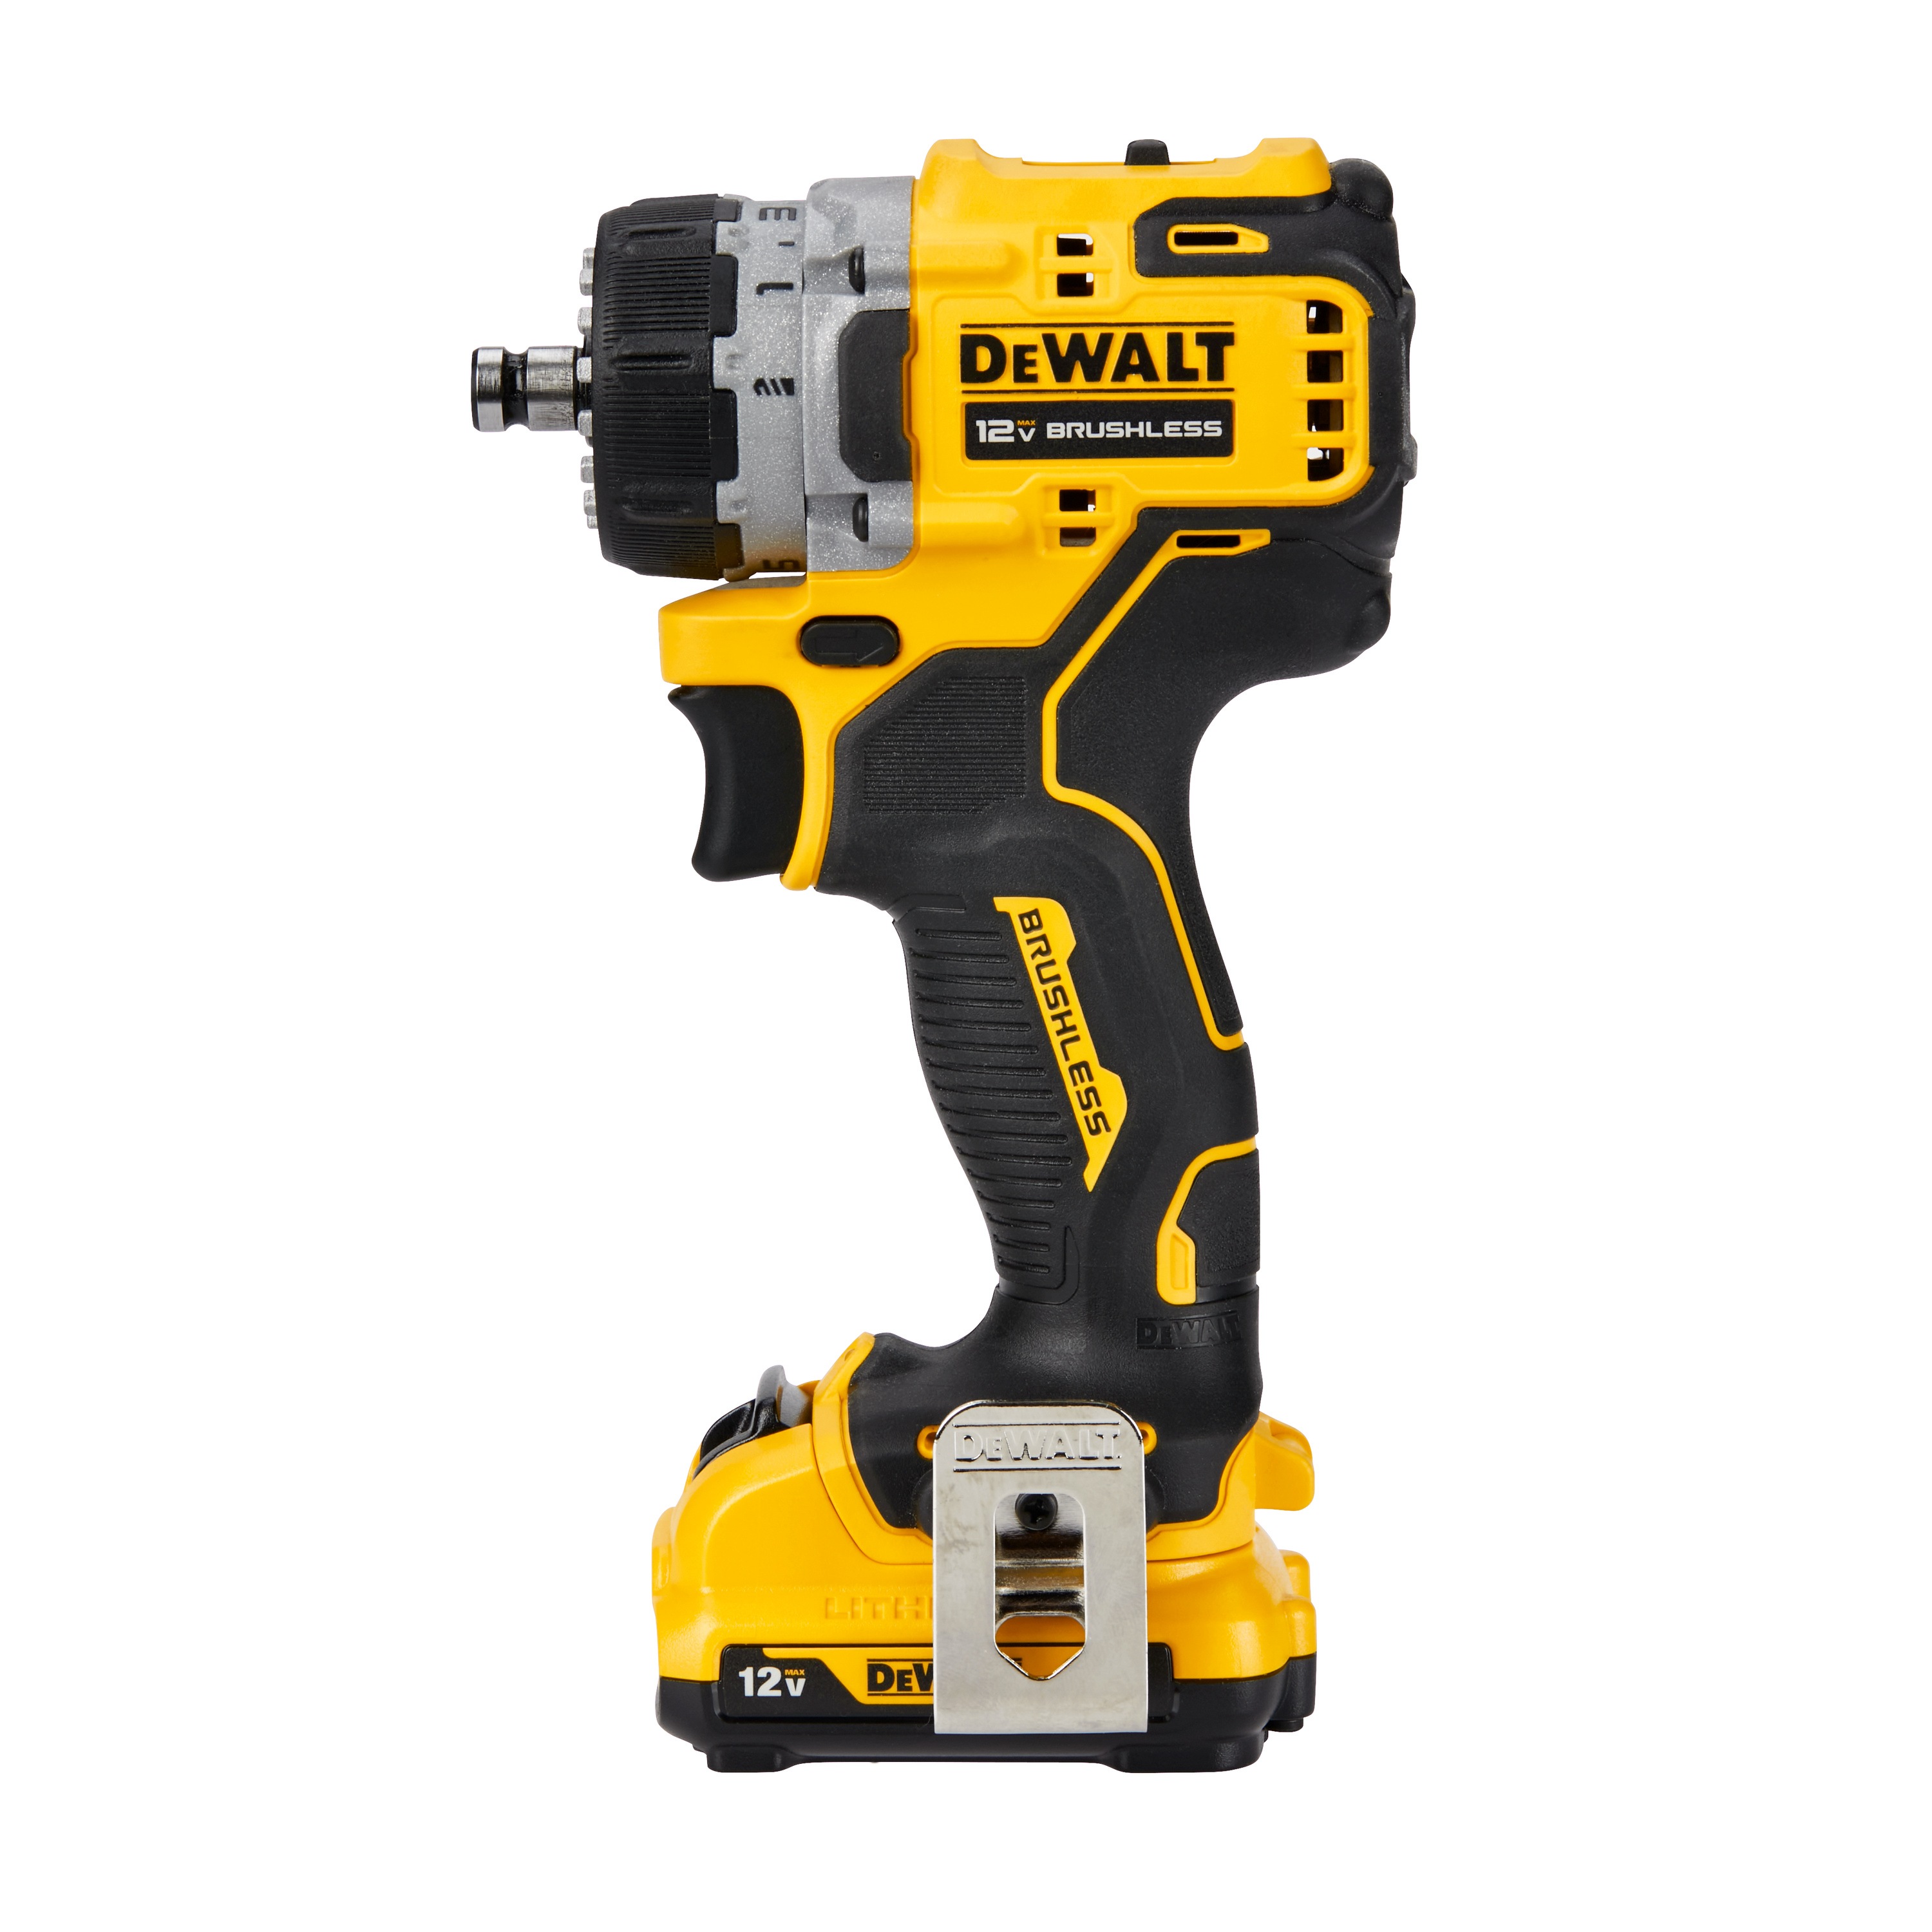 DEWALT - XTREME 12V MAX Brushless Cordless 5in1 DrillDriver Kit - DCD703F1